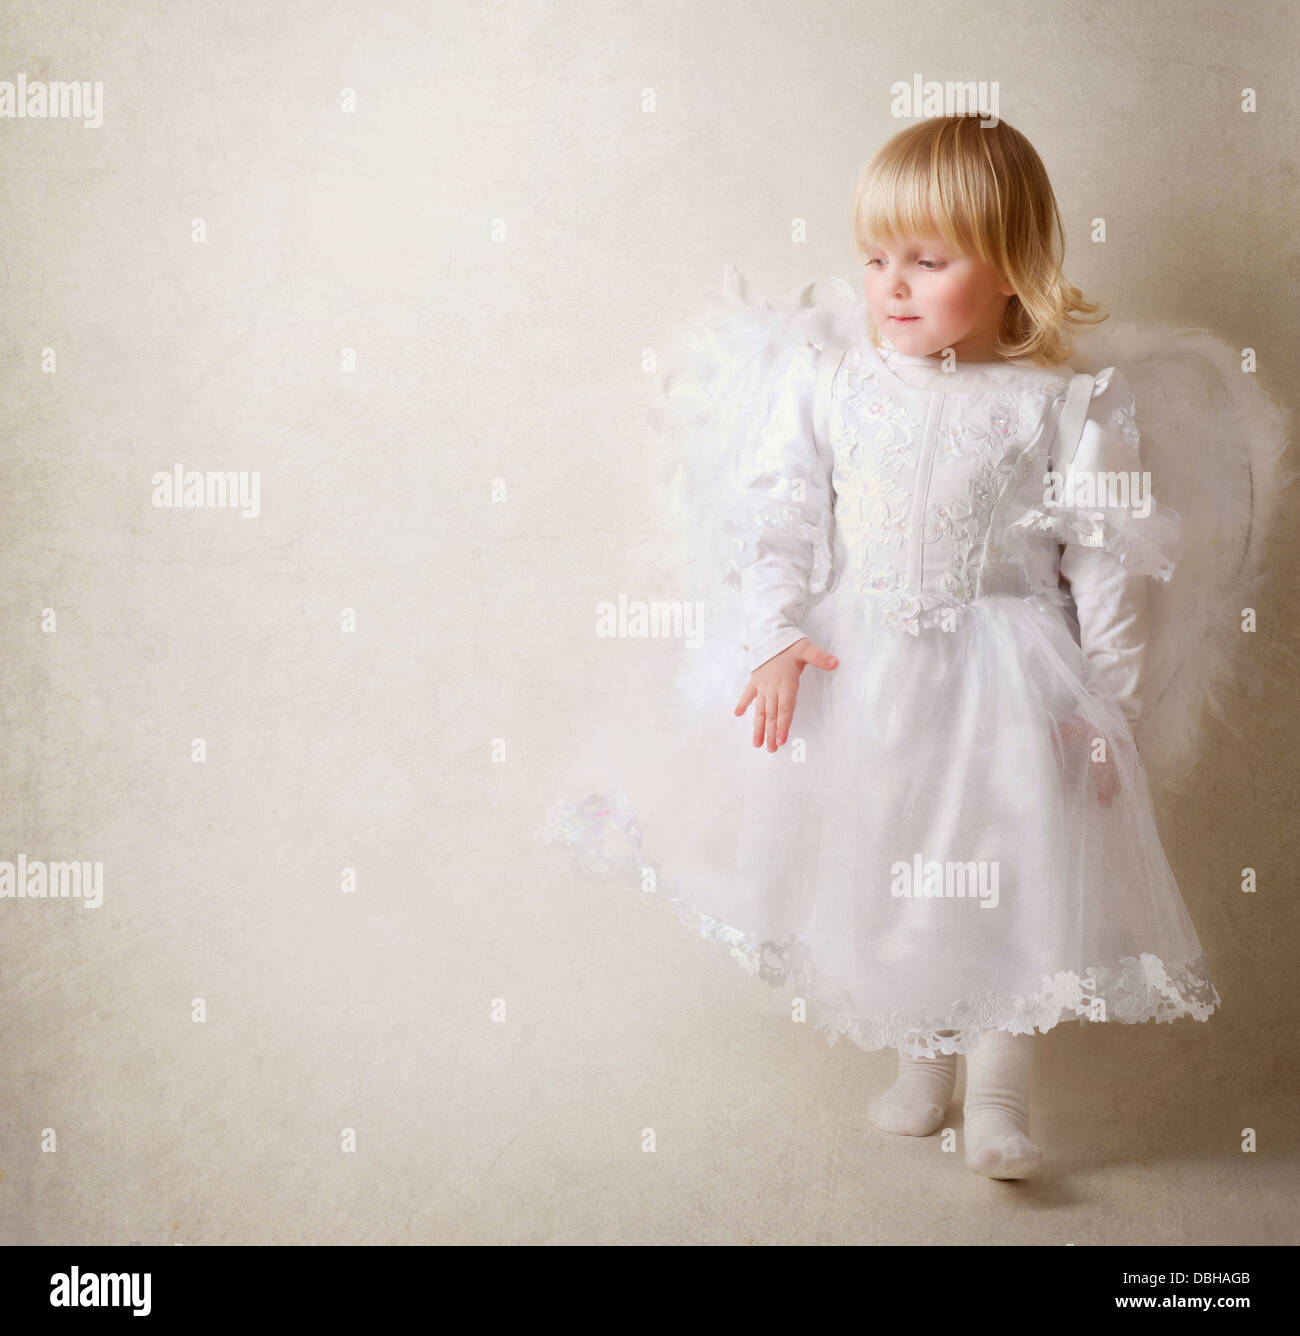 Baby girl in an angel dress Stock Photo